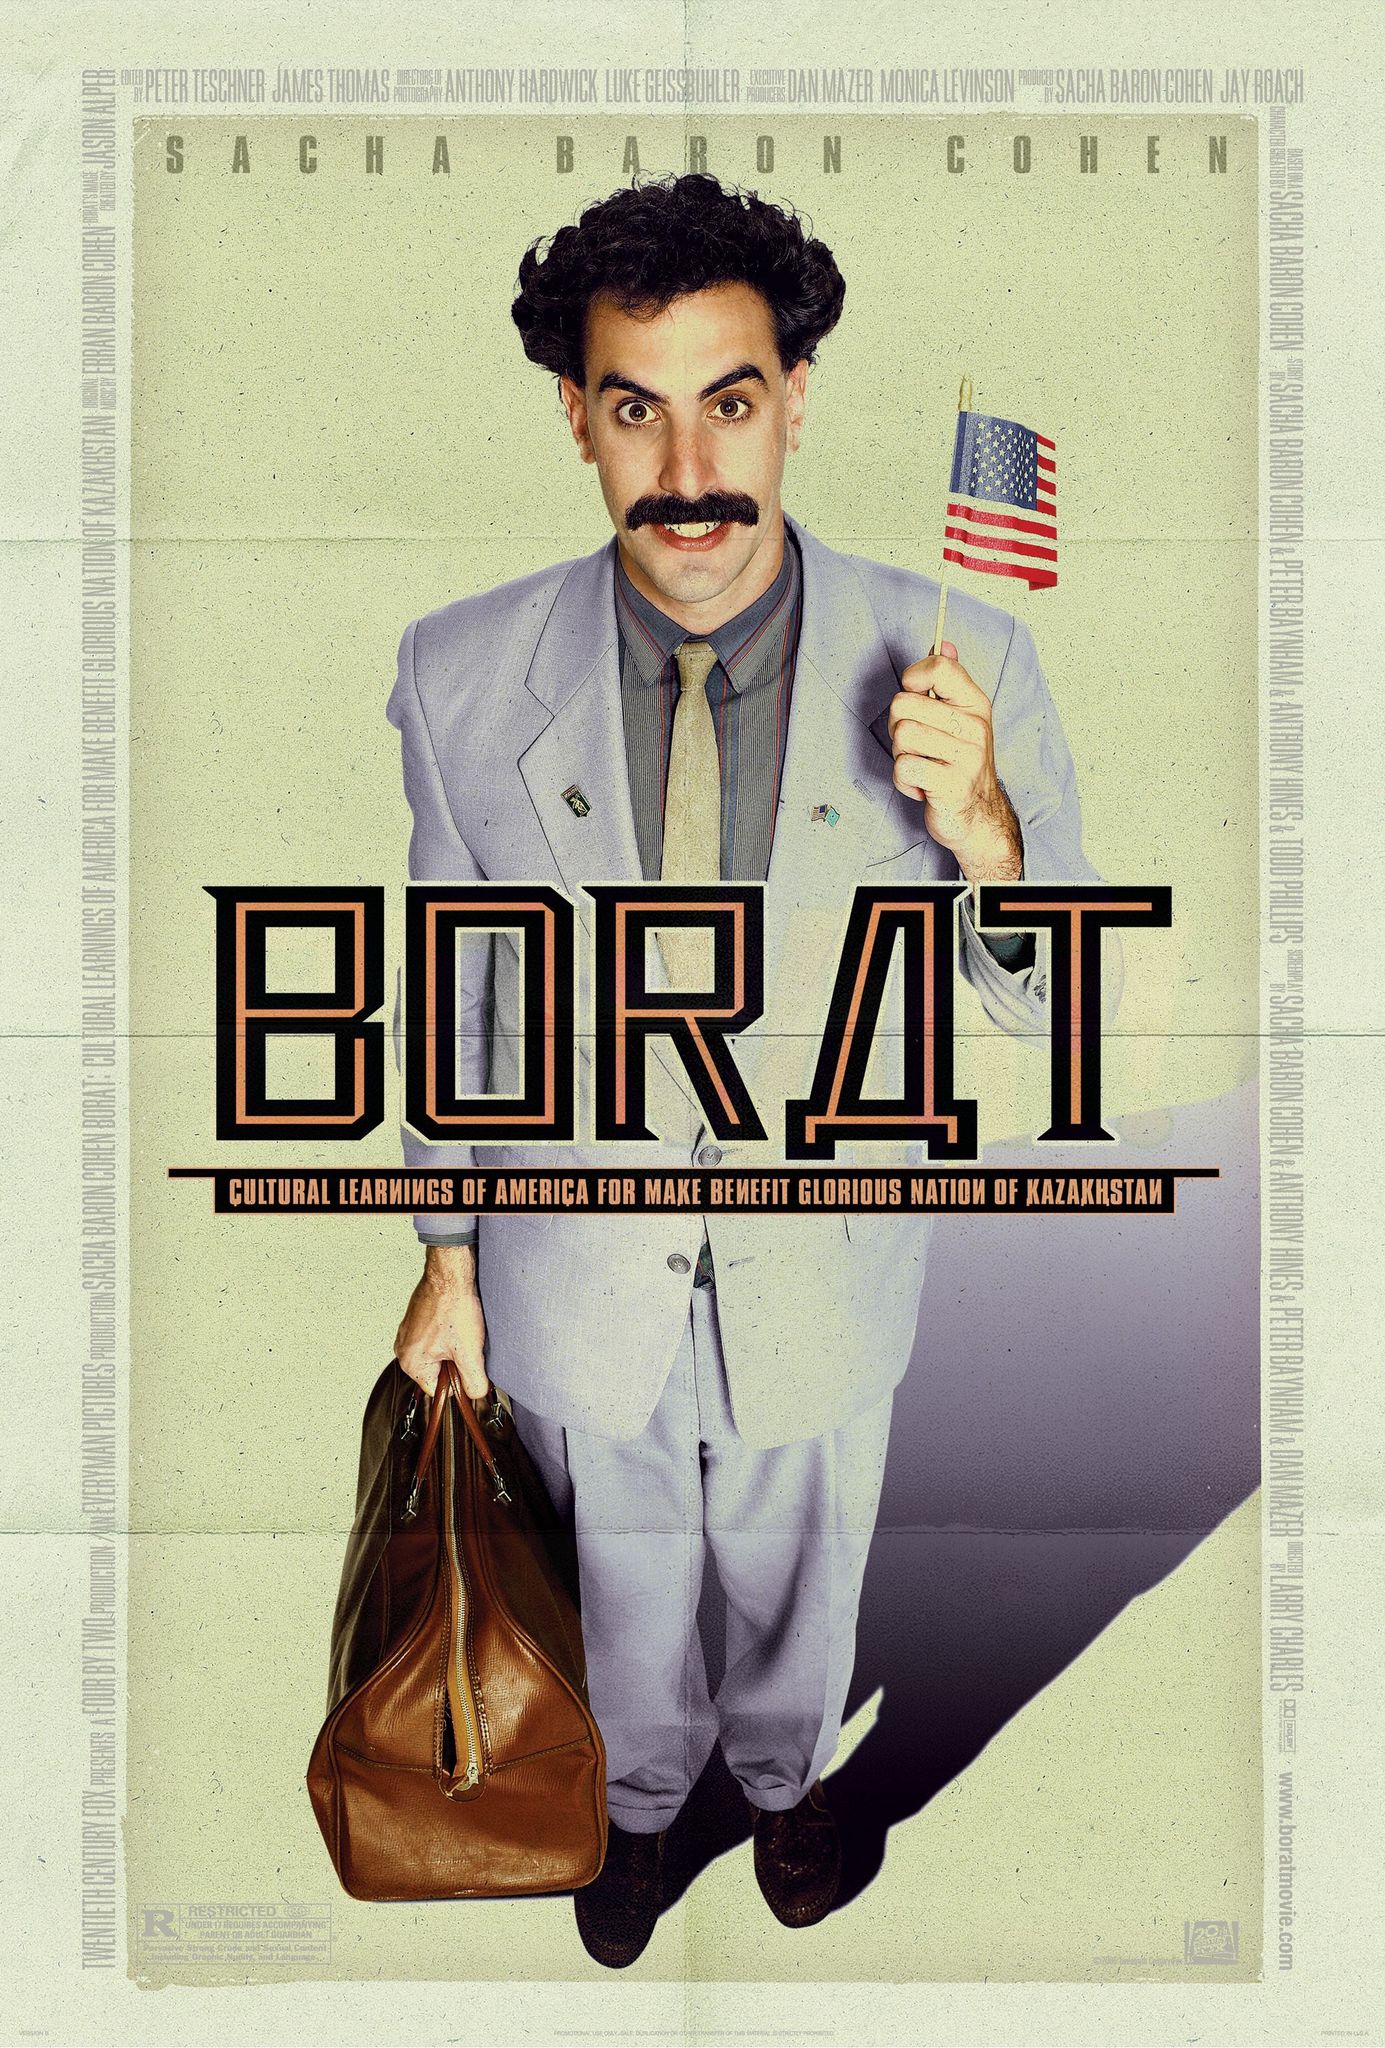 Photo of Borat